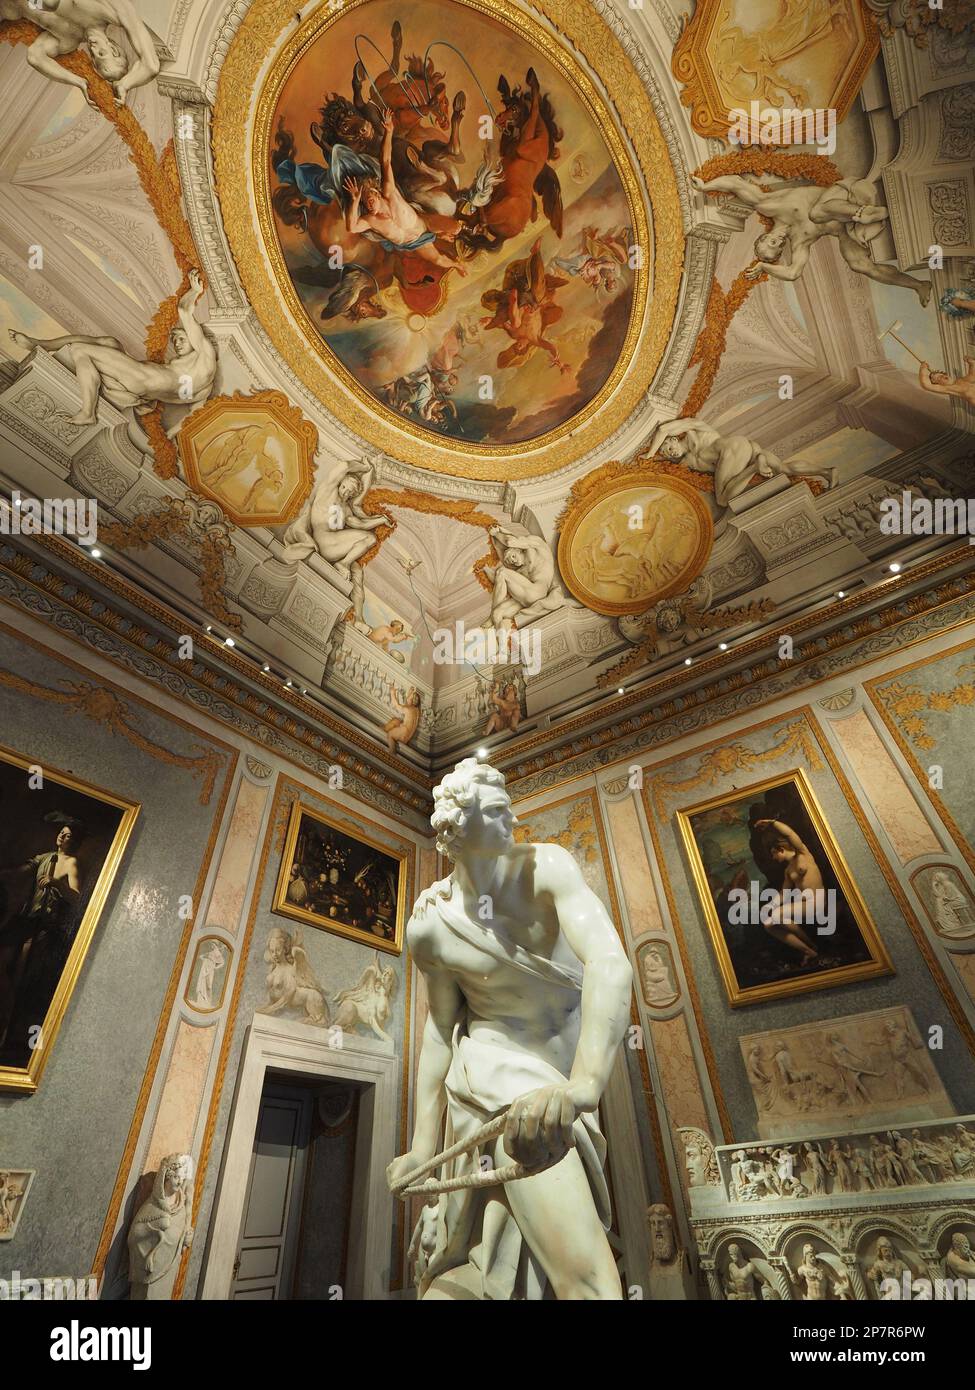 David statue by Gian Lorenzo Bernini in the Galleria Borghese museum in Rome, Italy Stock Photo